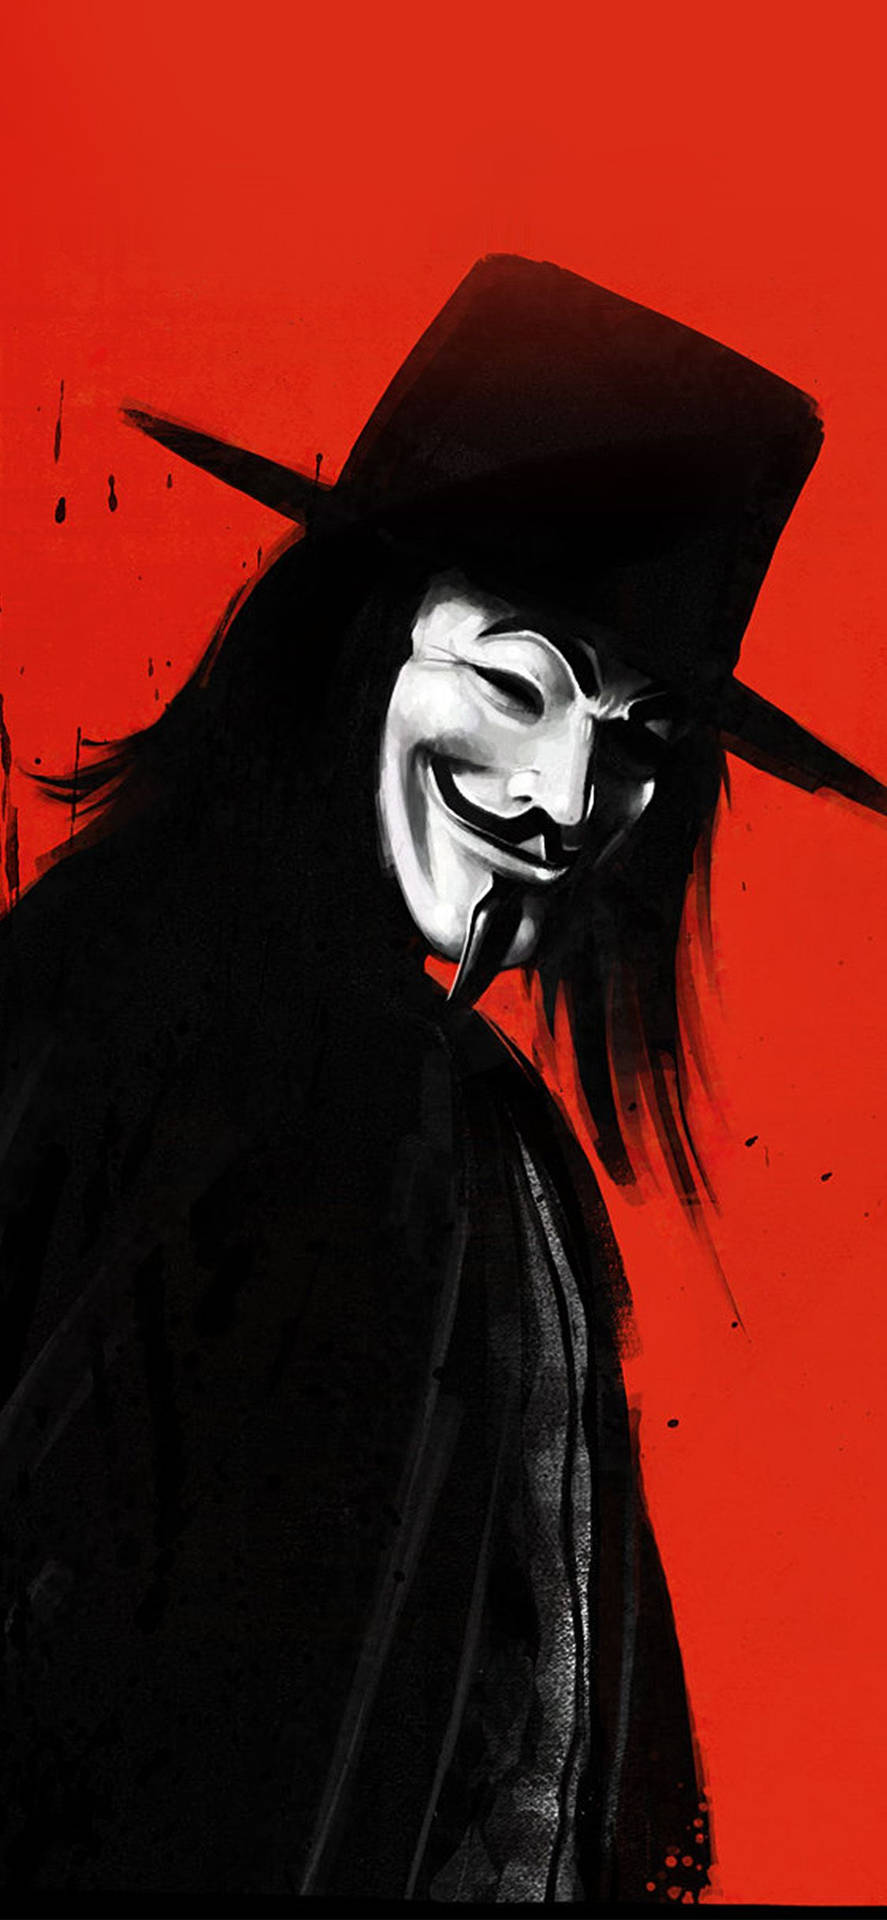 V for Vendetta Wallpaper APK for Android Download